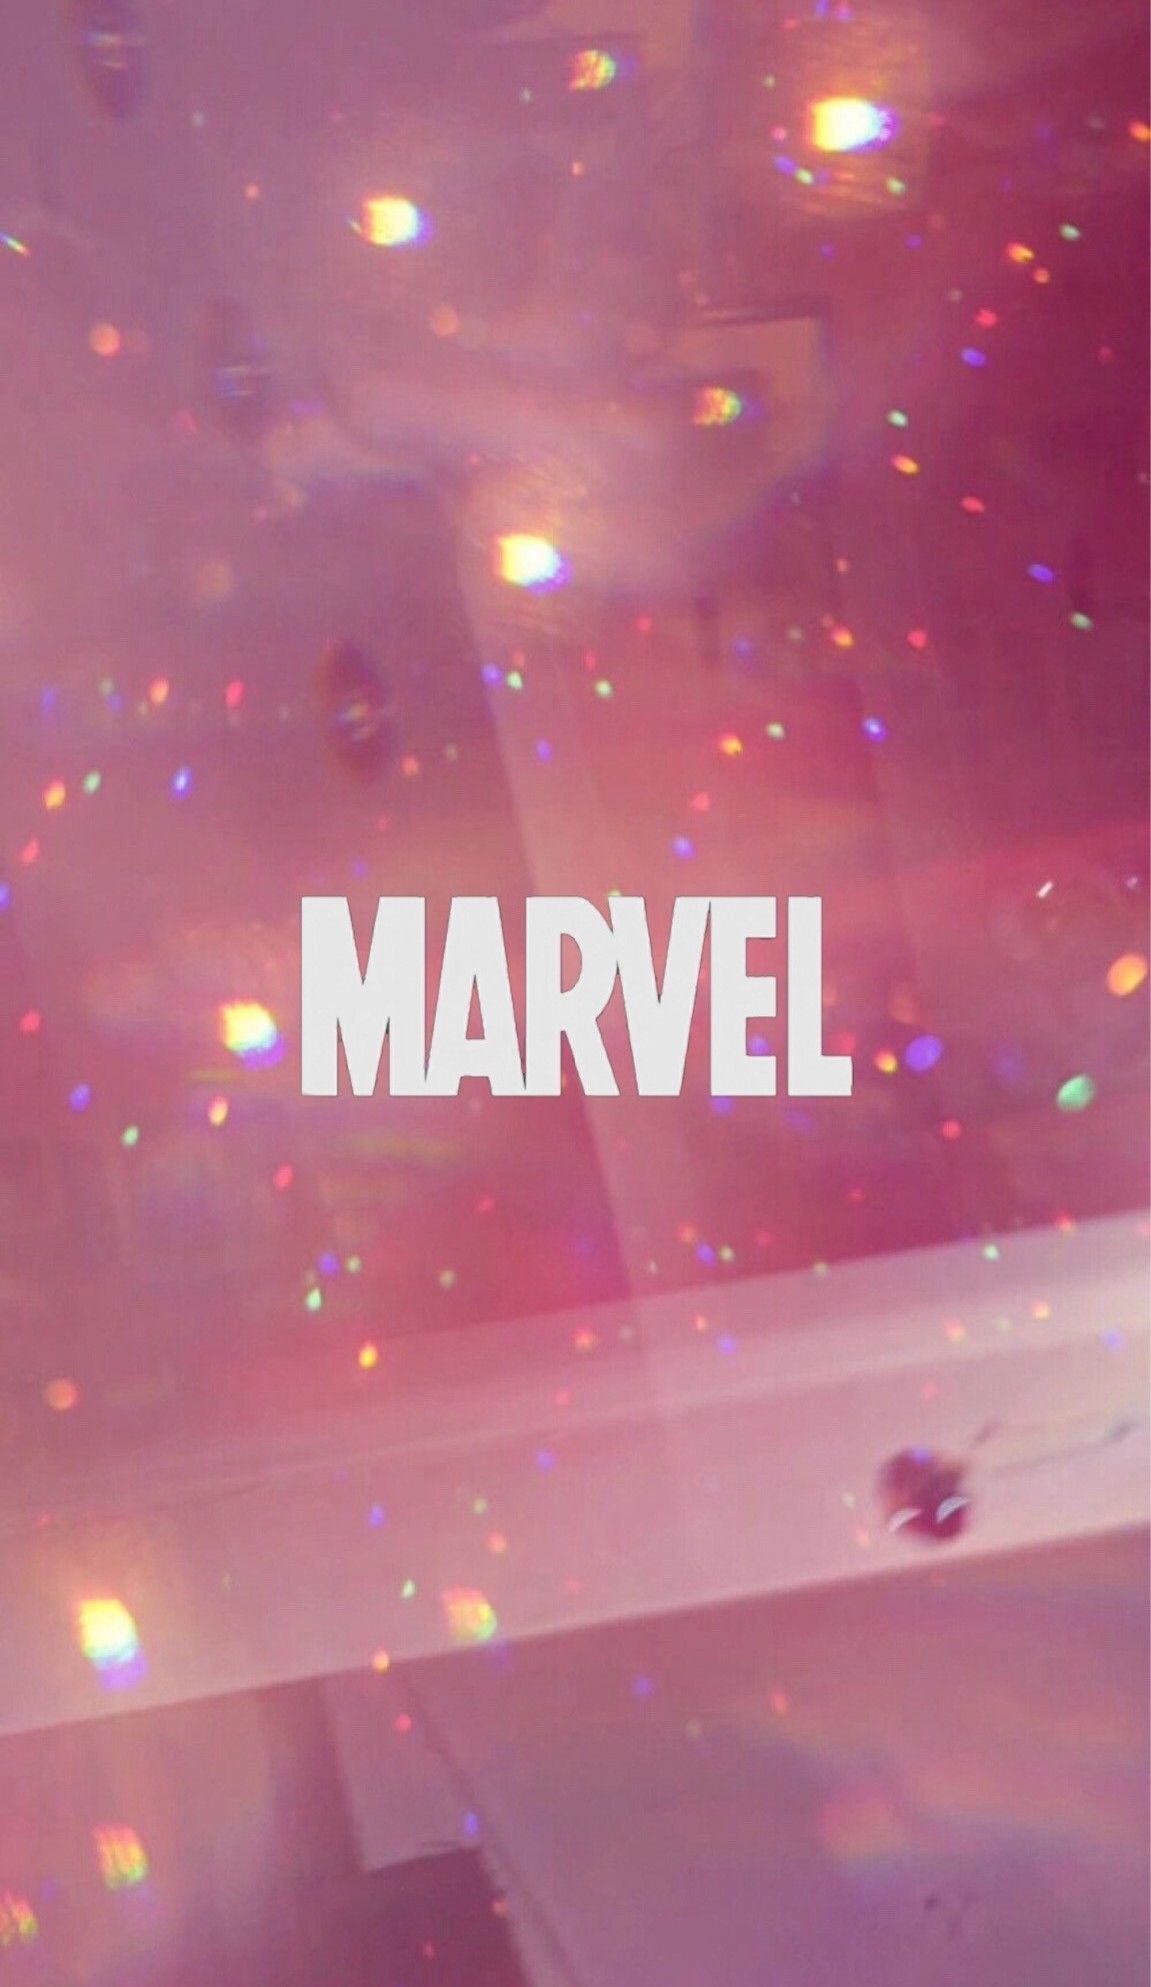 Marvellocks% - Marvel background, Avengers wallpaper, Photo wall collage